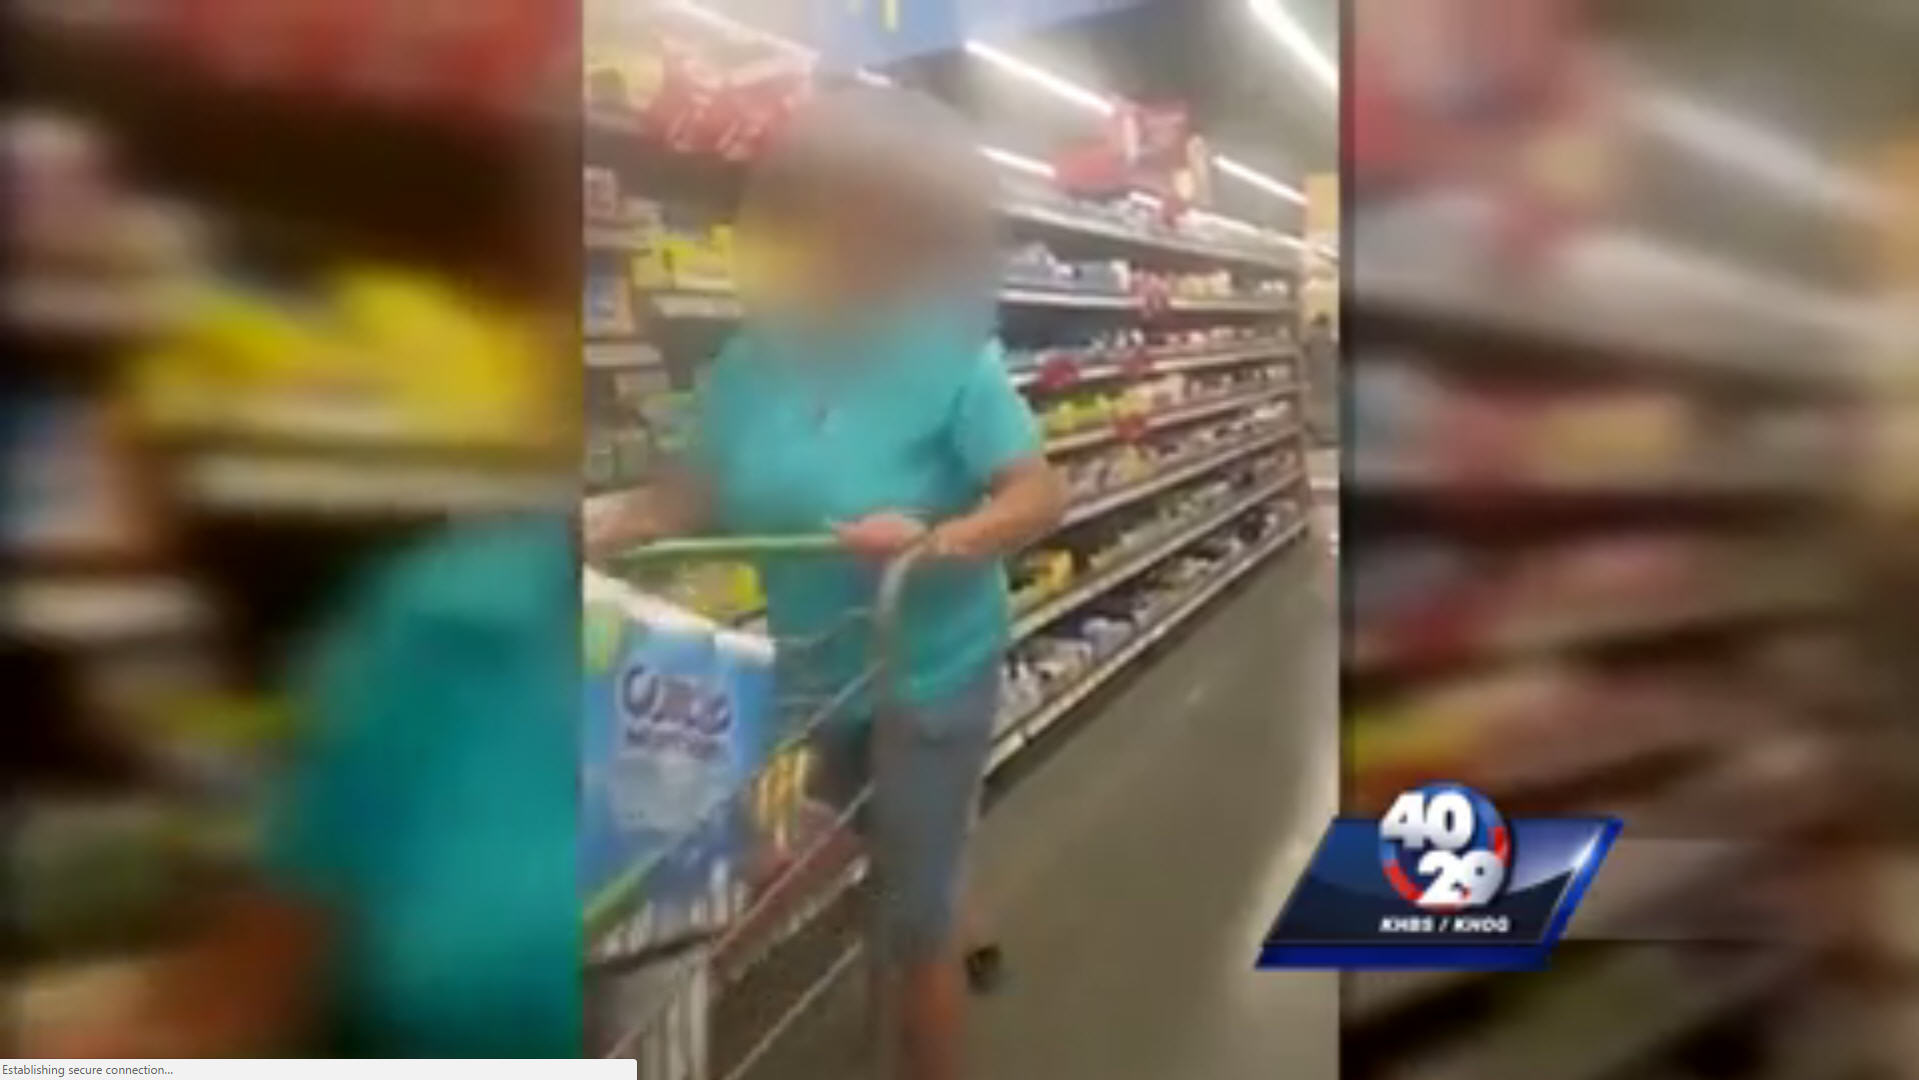 Video of racist encounter in Centerton Walmart goes viral